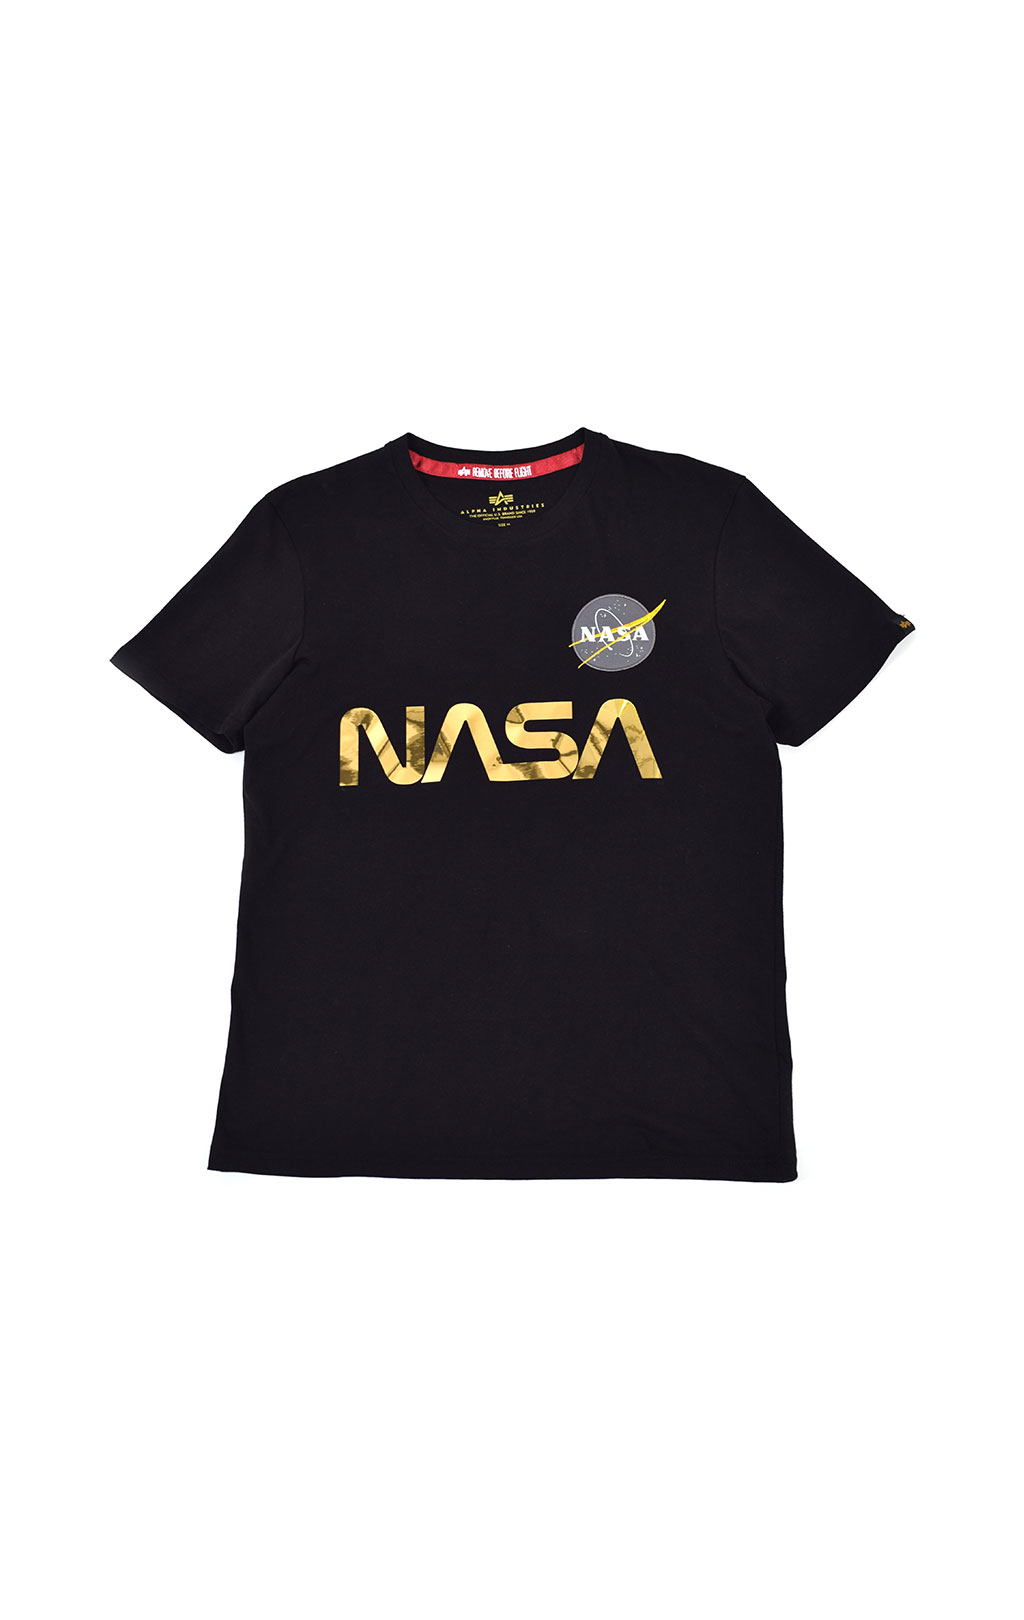 Футболка ALPHA INDUSTRIES NASA Reflective black/gold 